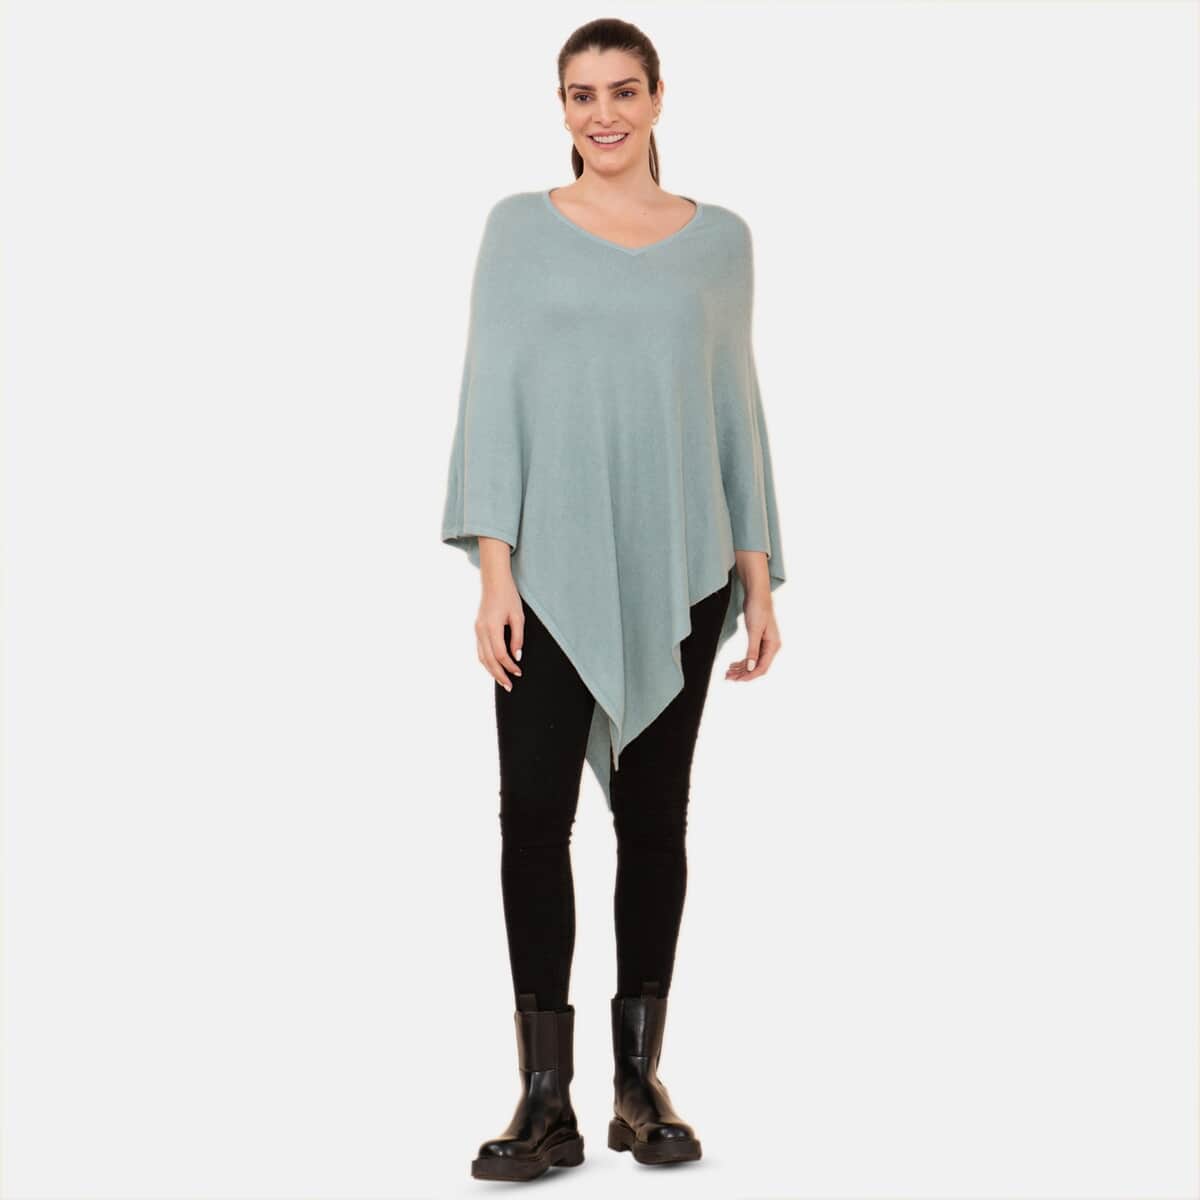 100% Cashmere Wool Designer LA MAREY Teal Poncho - One Size Fits Most image number 0